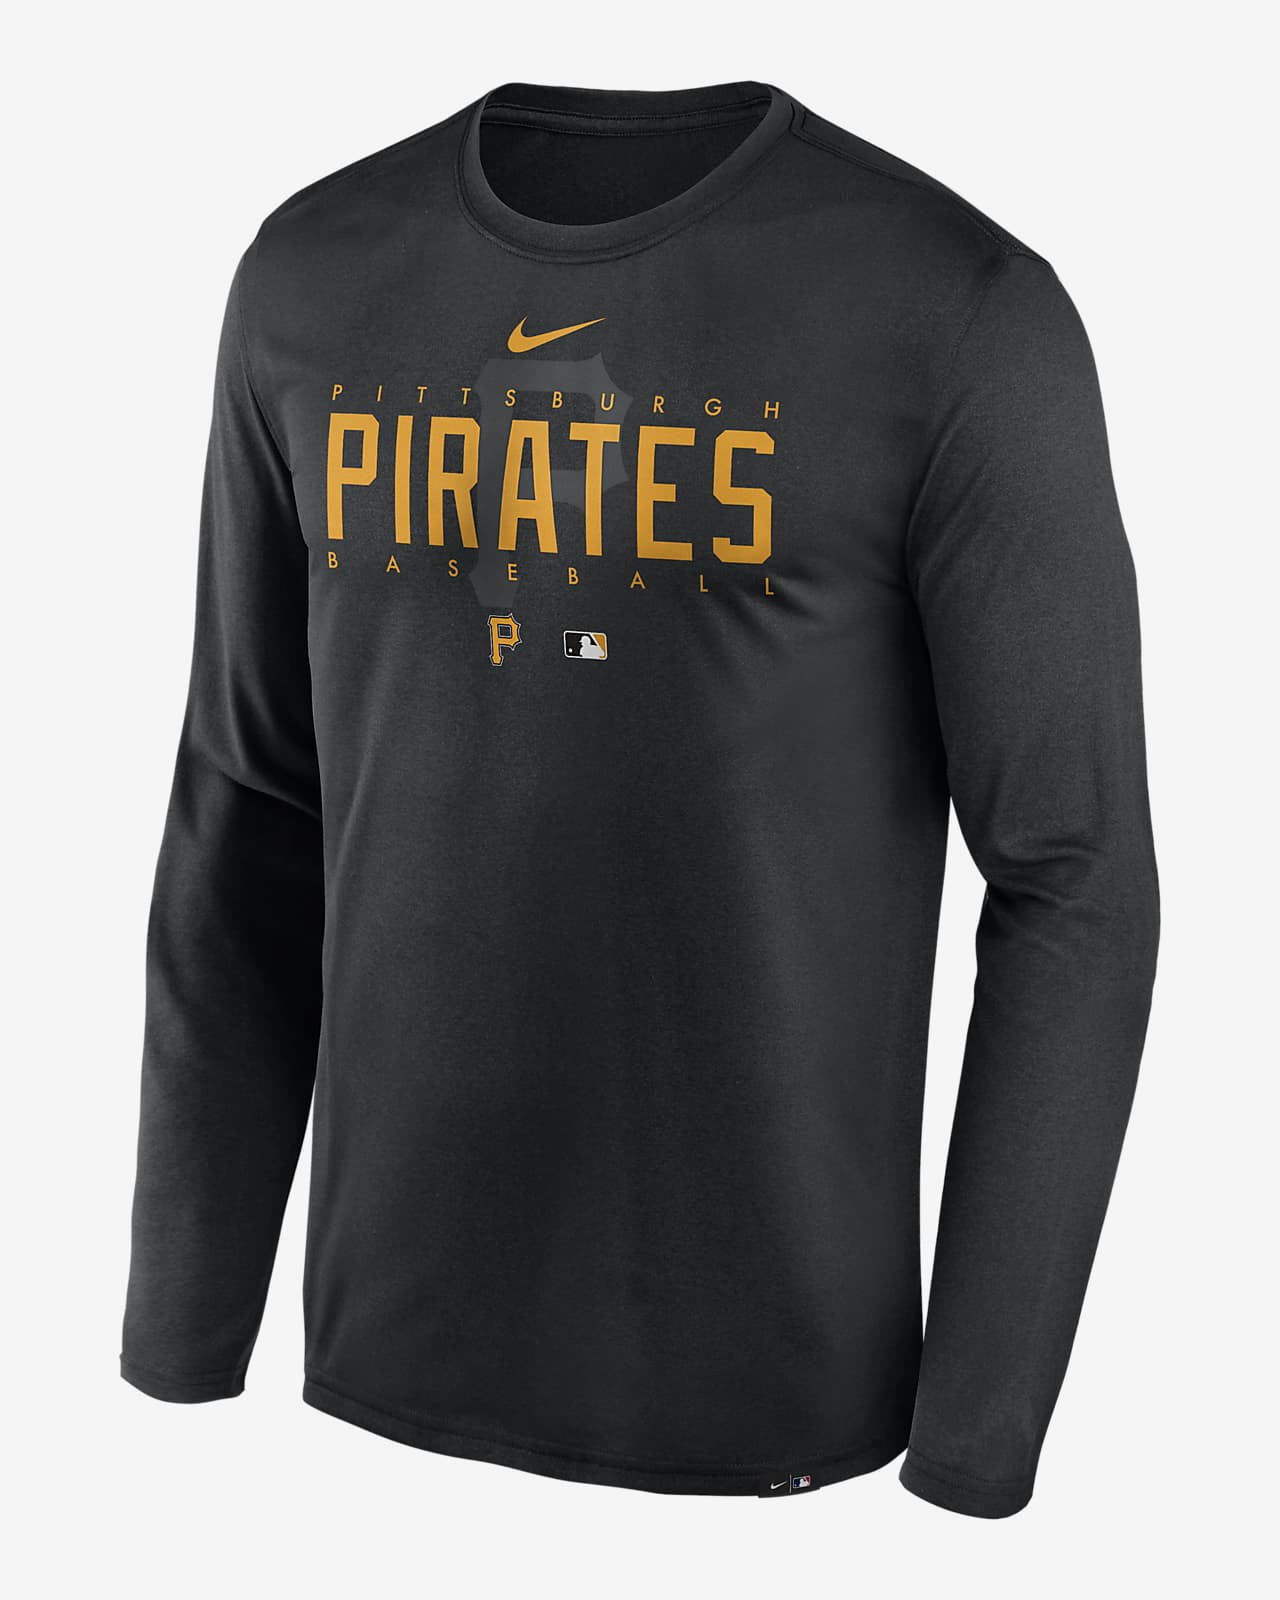 pittsburgh pirates golf shirt